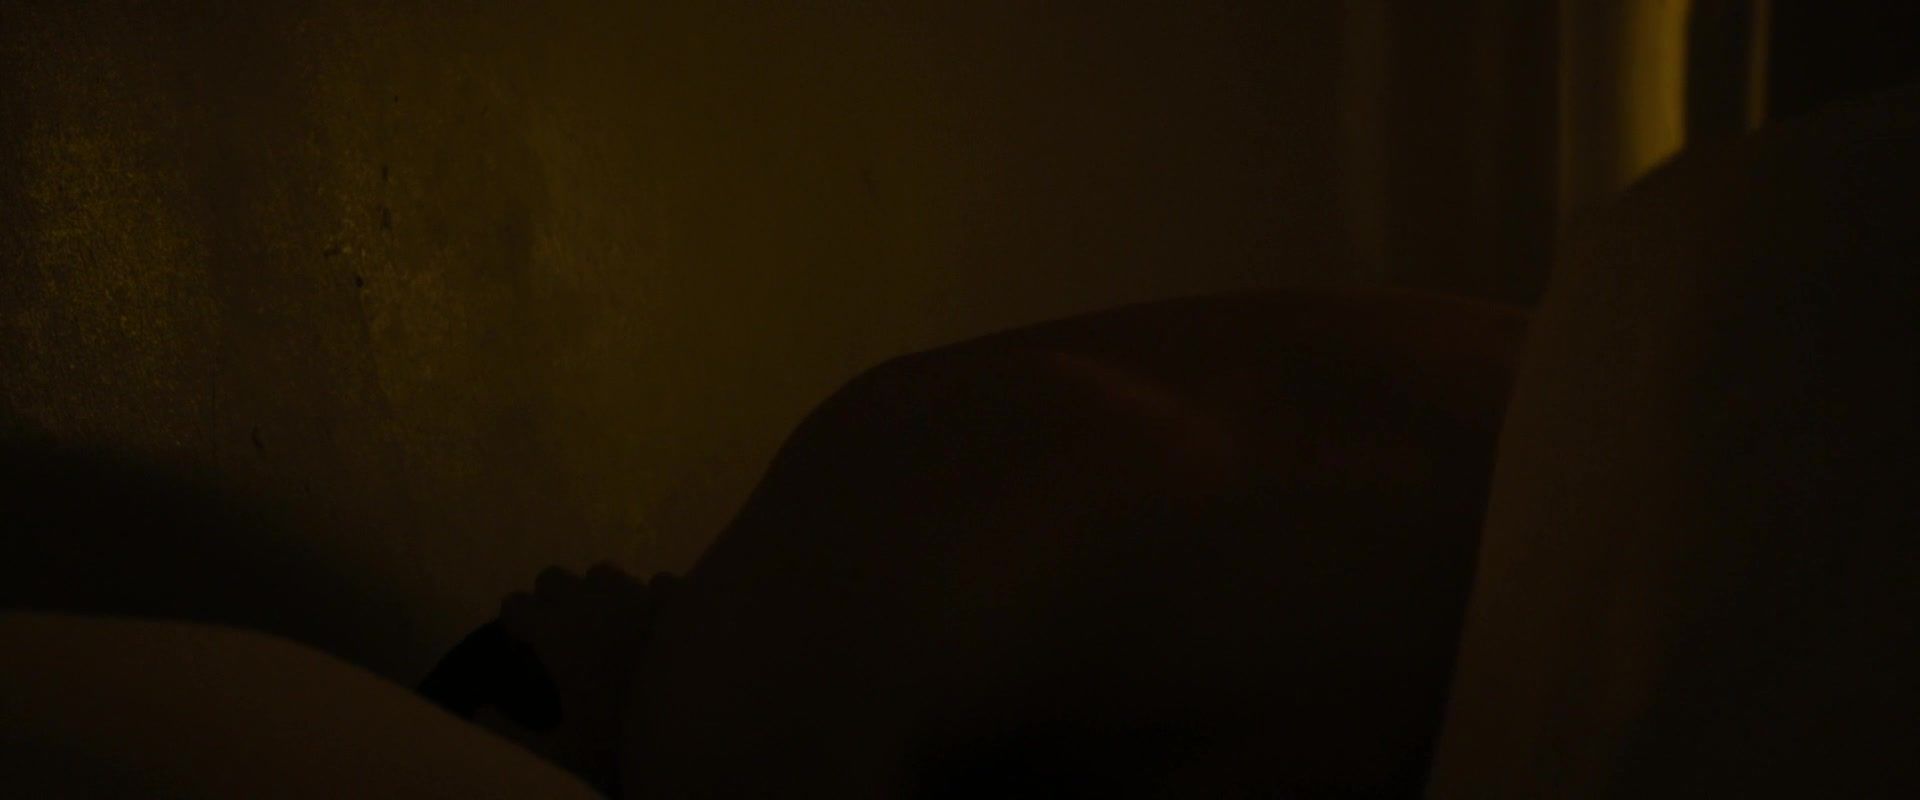 Alura Jenson Melanie Laurent sex scene of the film "Enemy" Price